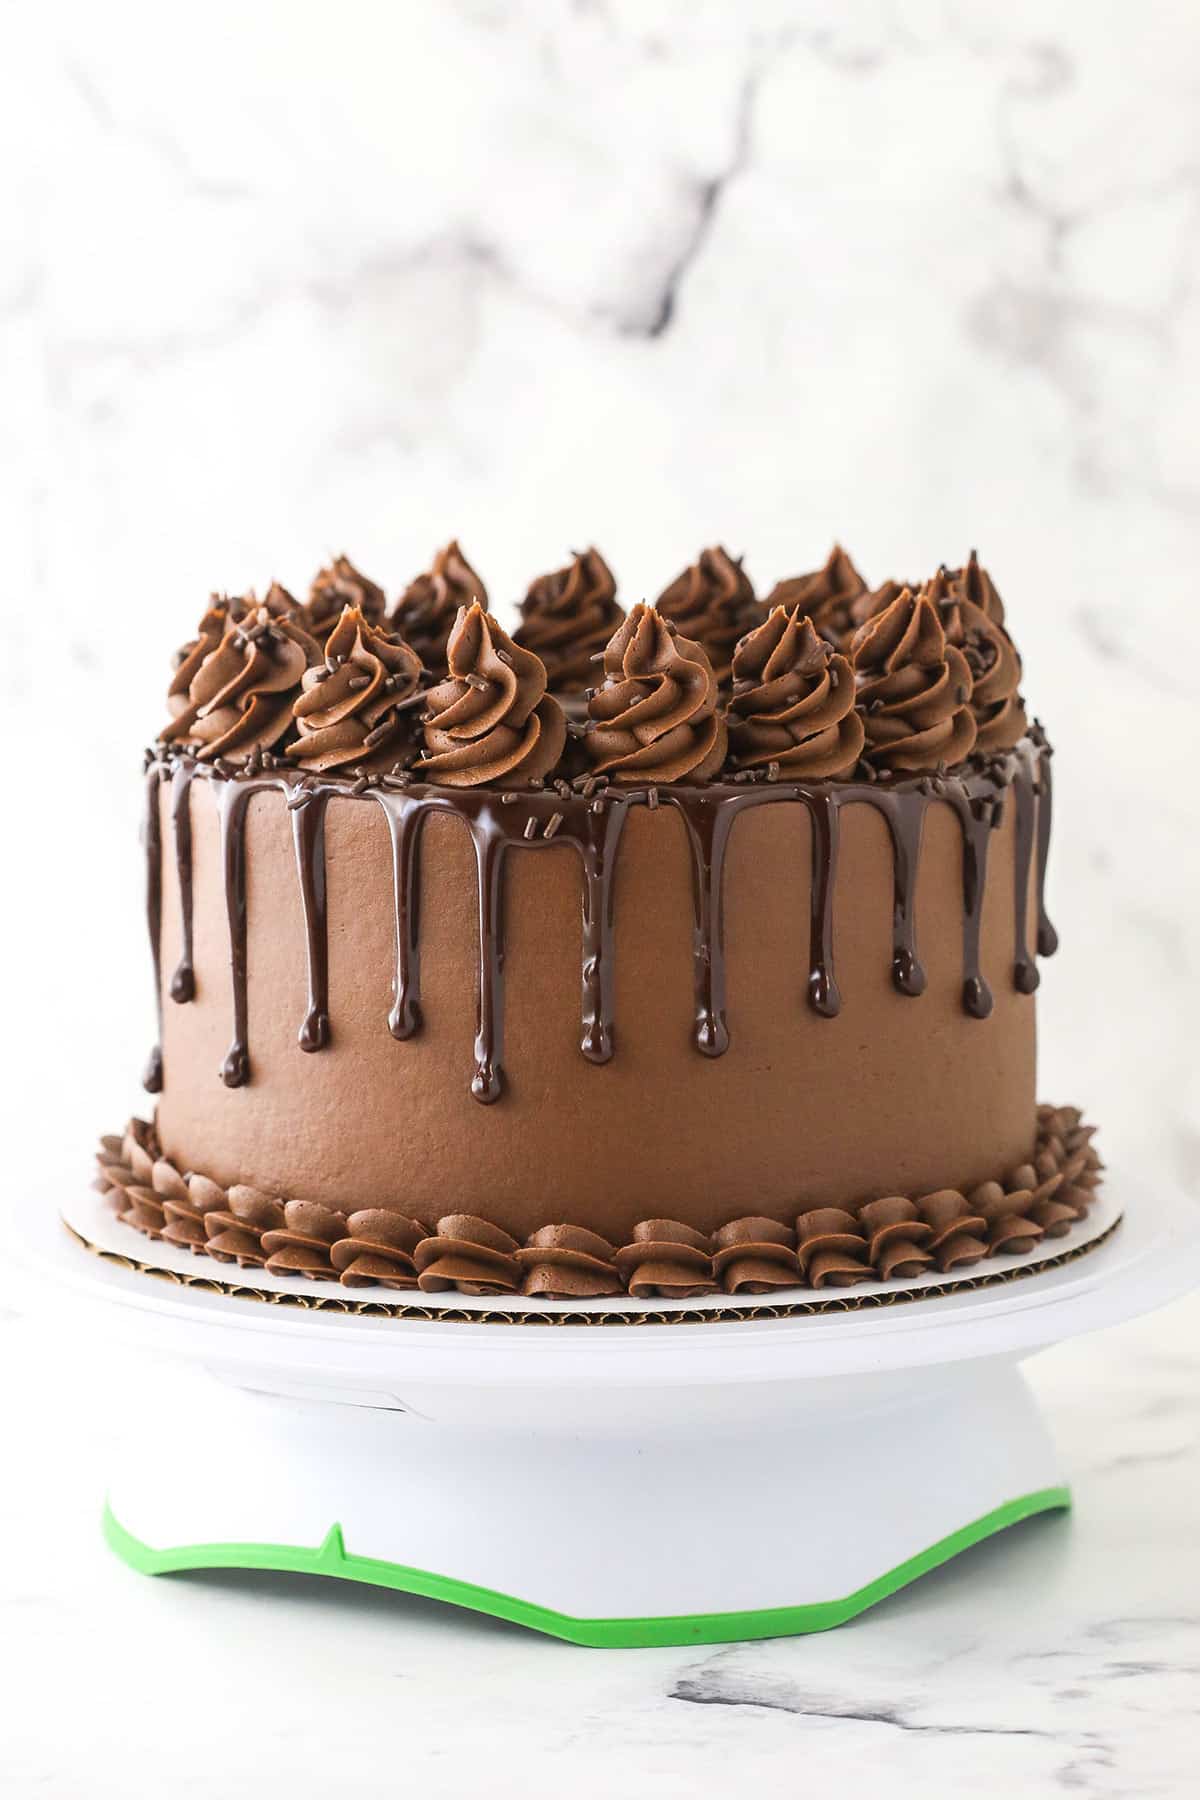 Homemade chocolate layer cake with ganach